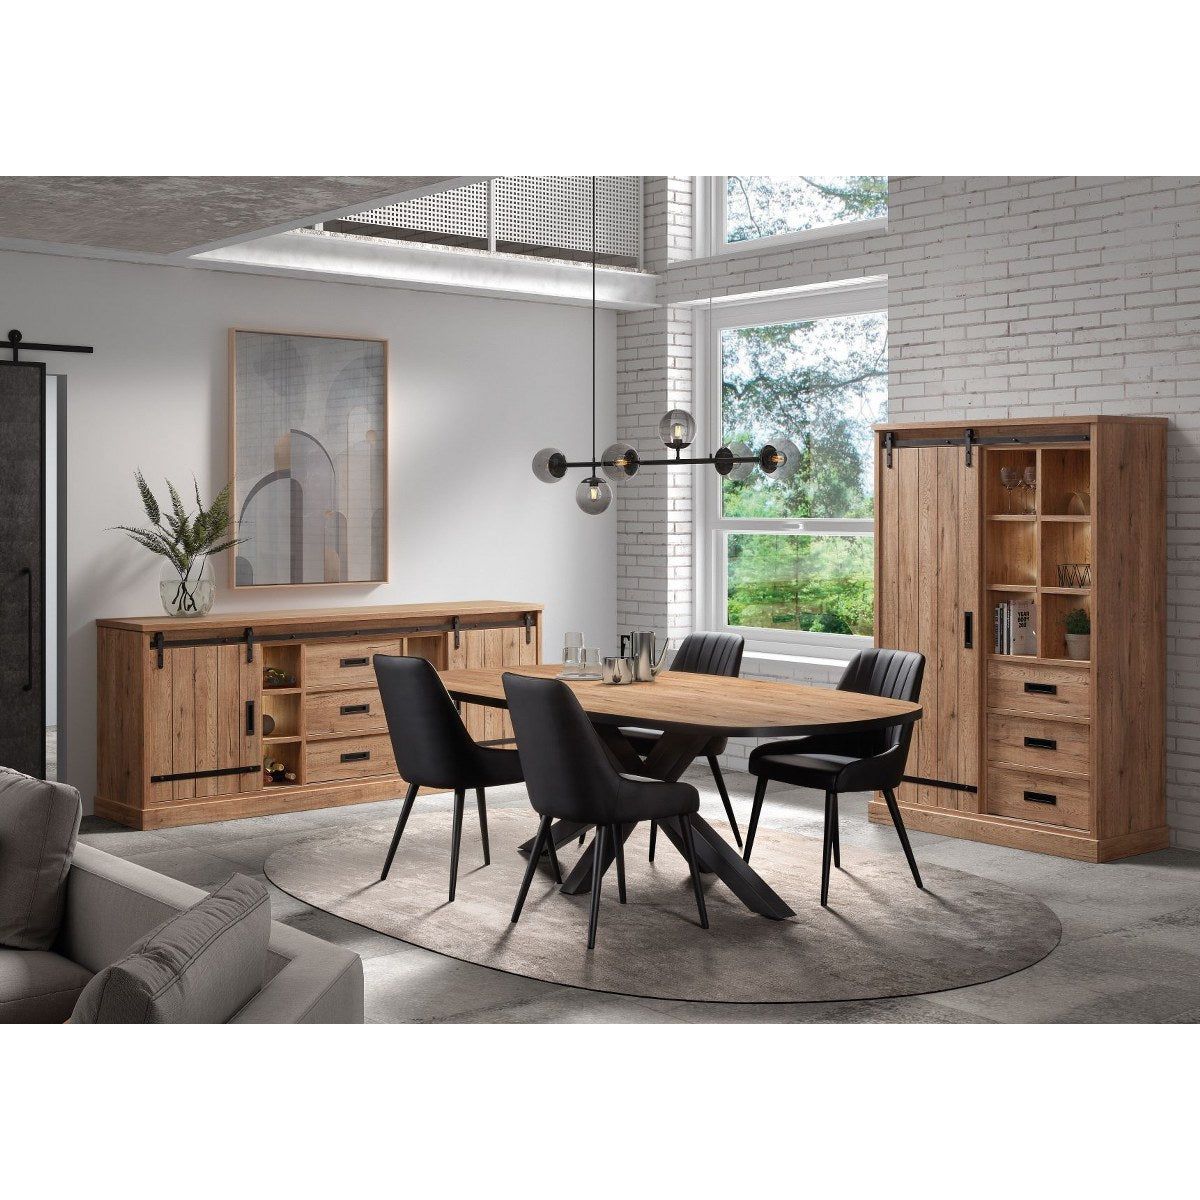 Coffee table | Furniture series Albert | brown, natural, black |